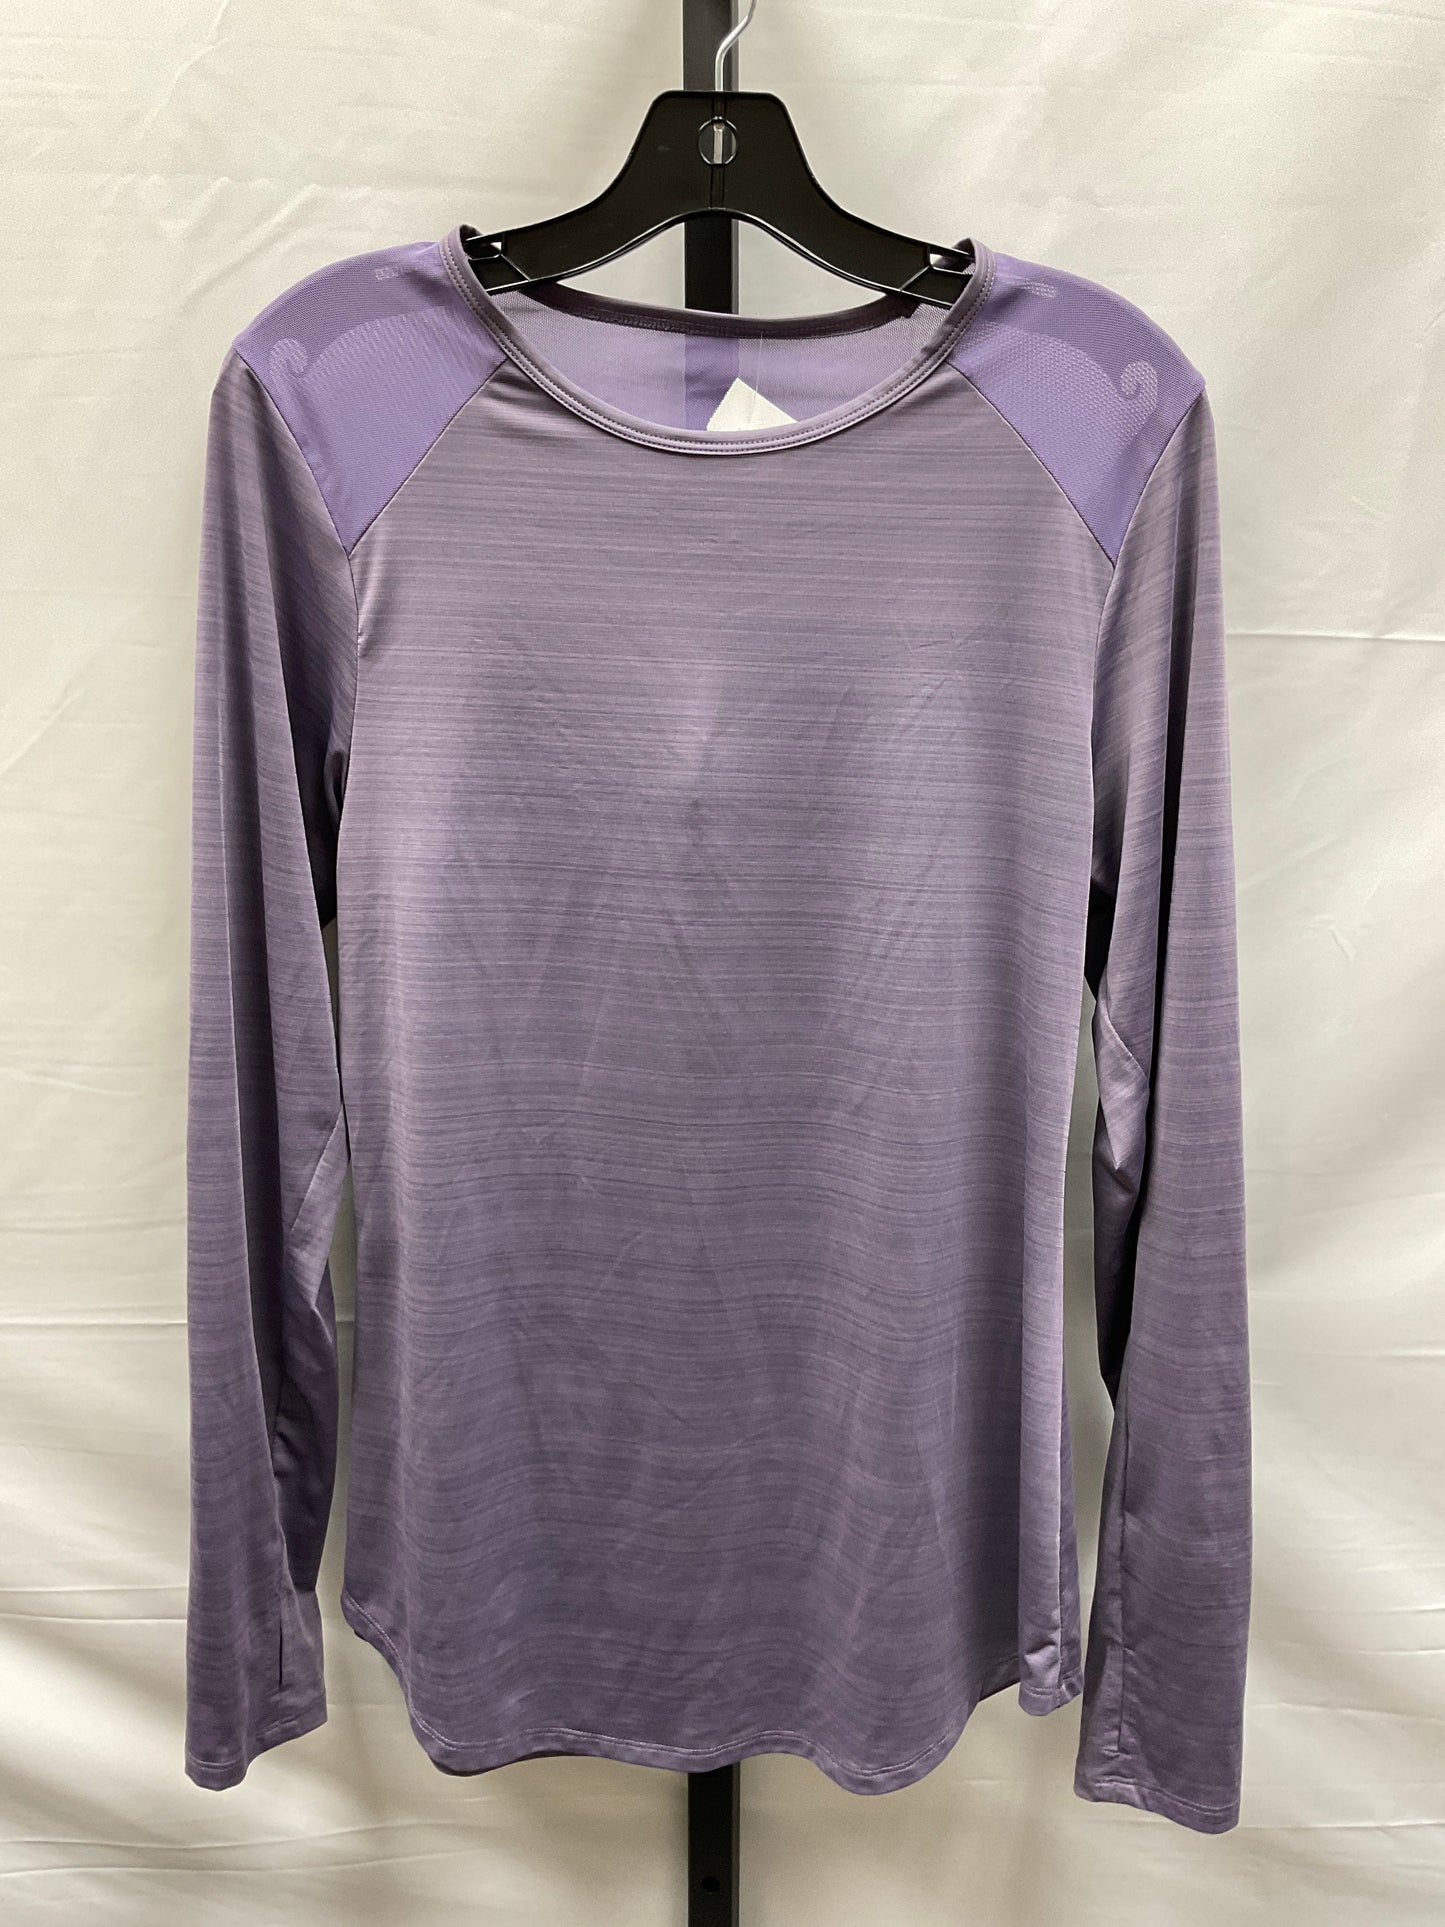 Purple Athletic Top Long Sleeve Crewneck Clothes Mentor, Size M